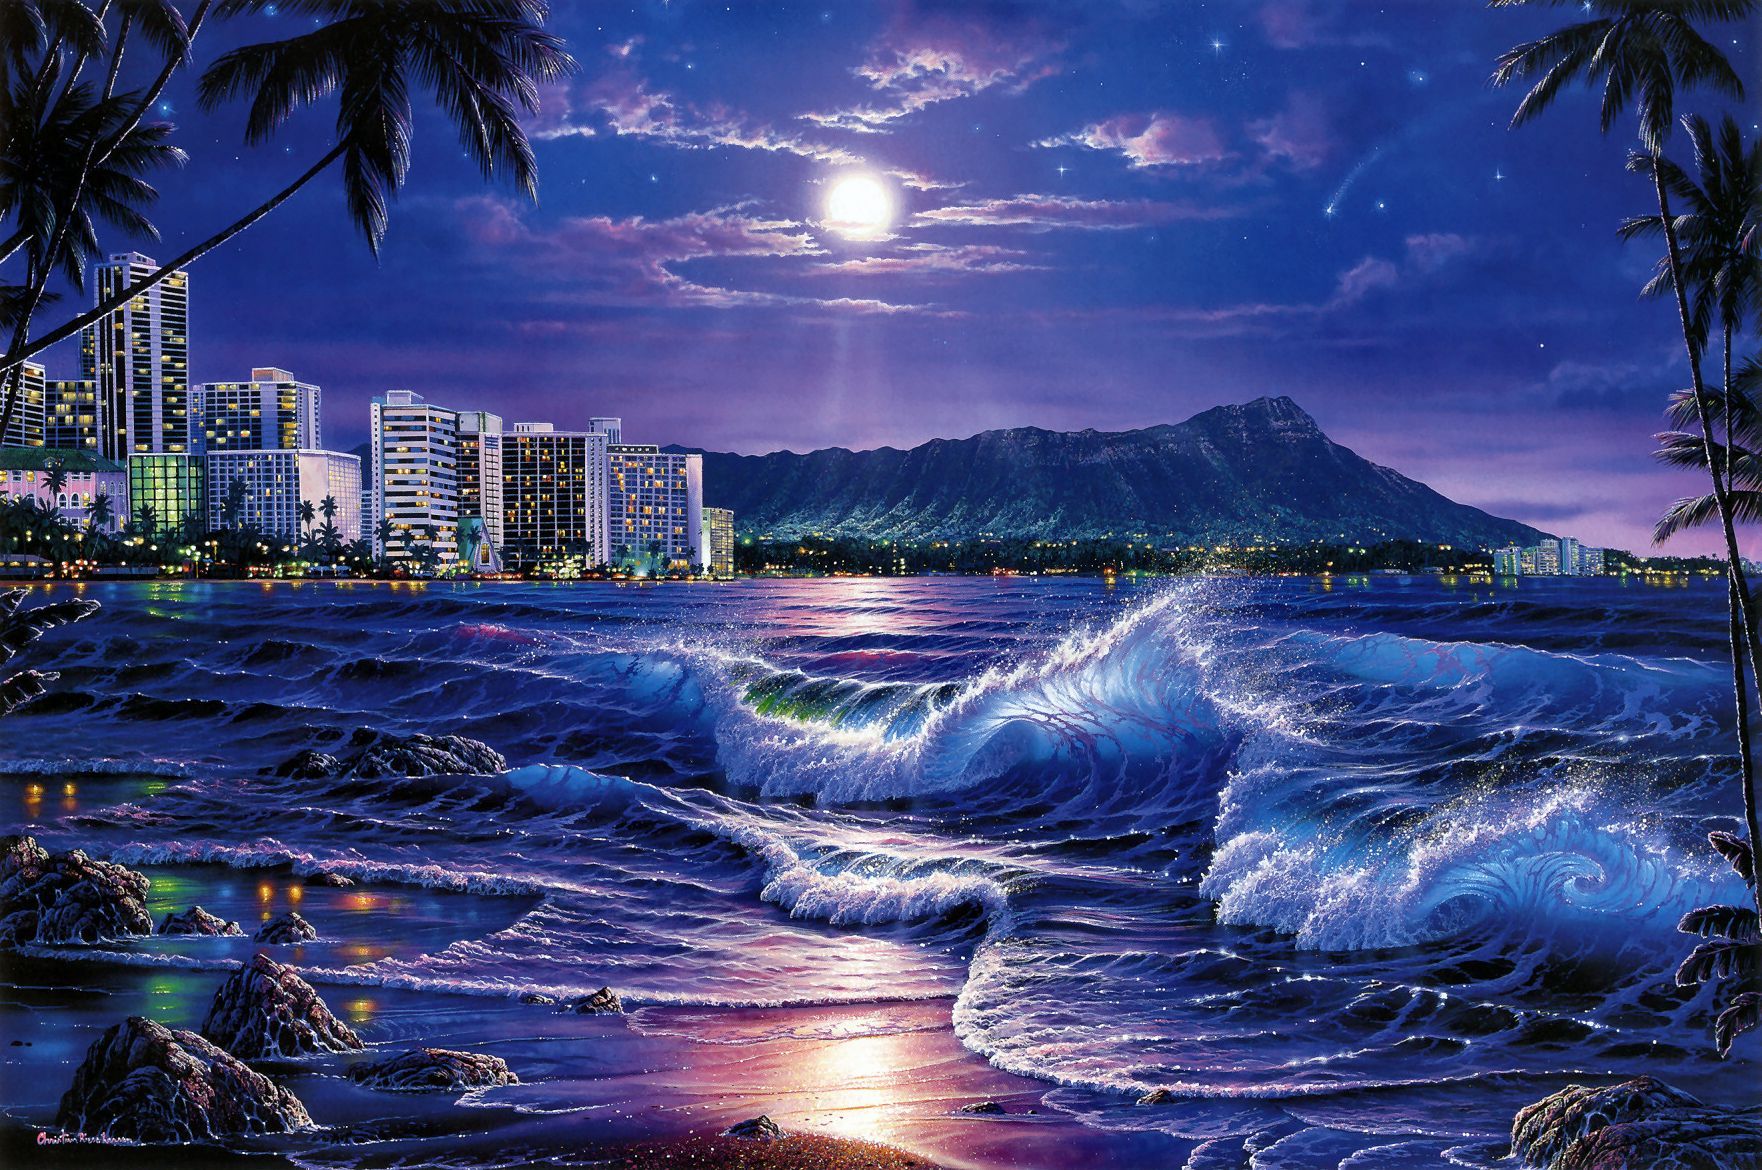 Waikiki Romance Christian Riese Lassen Google Image Search